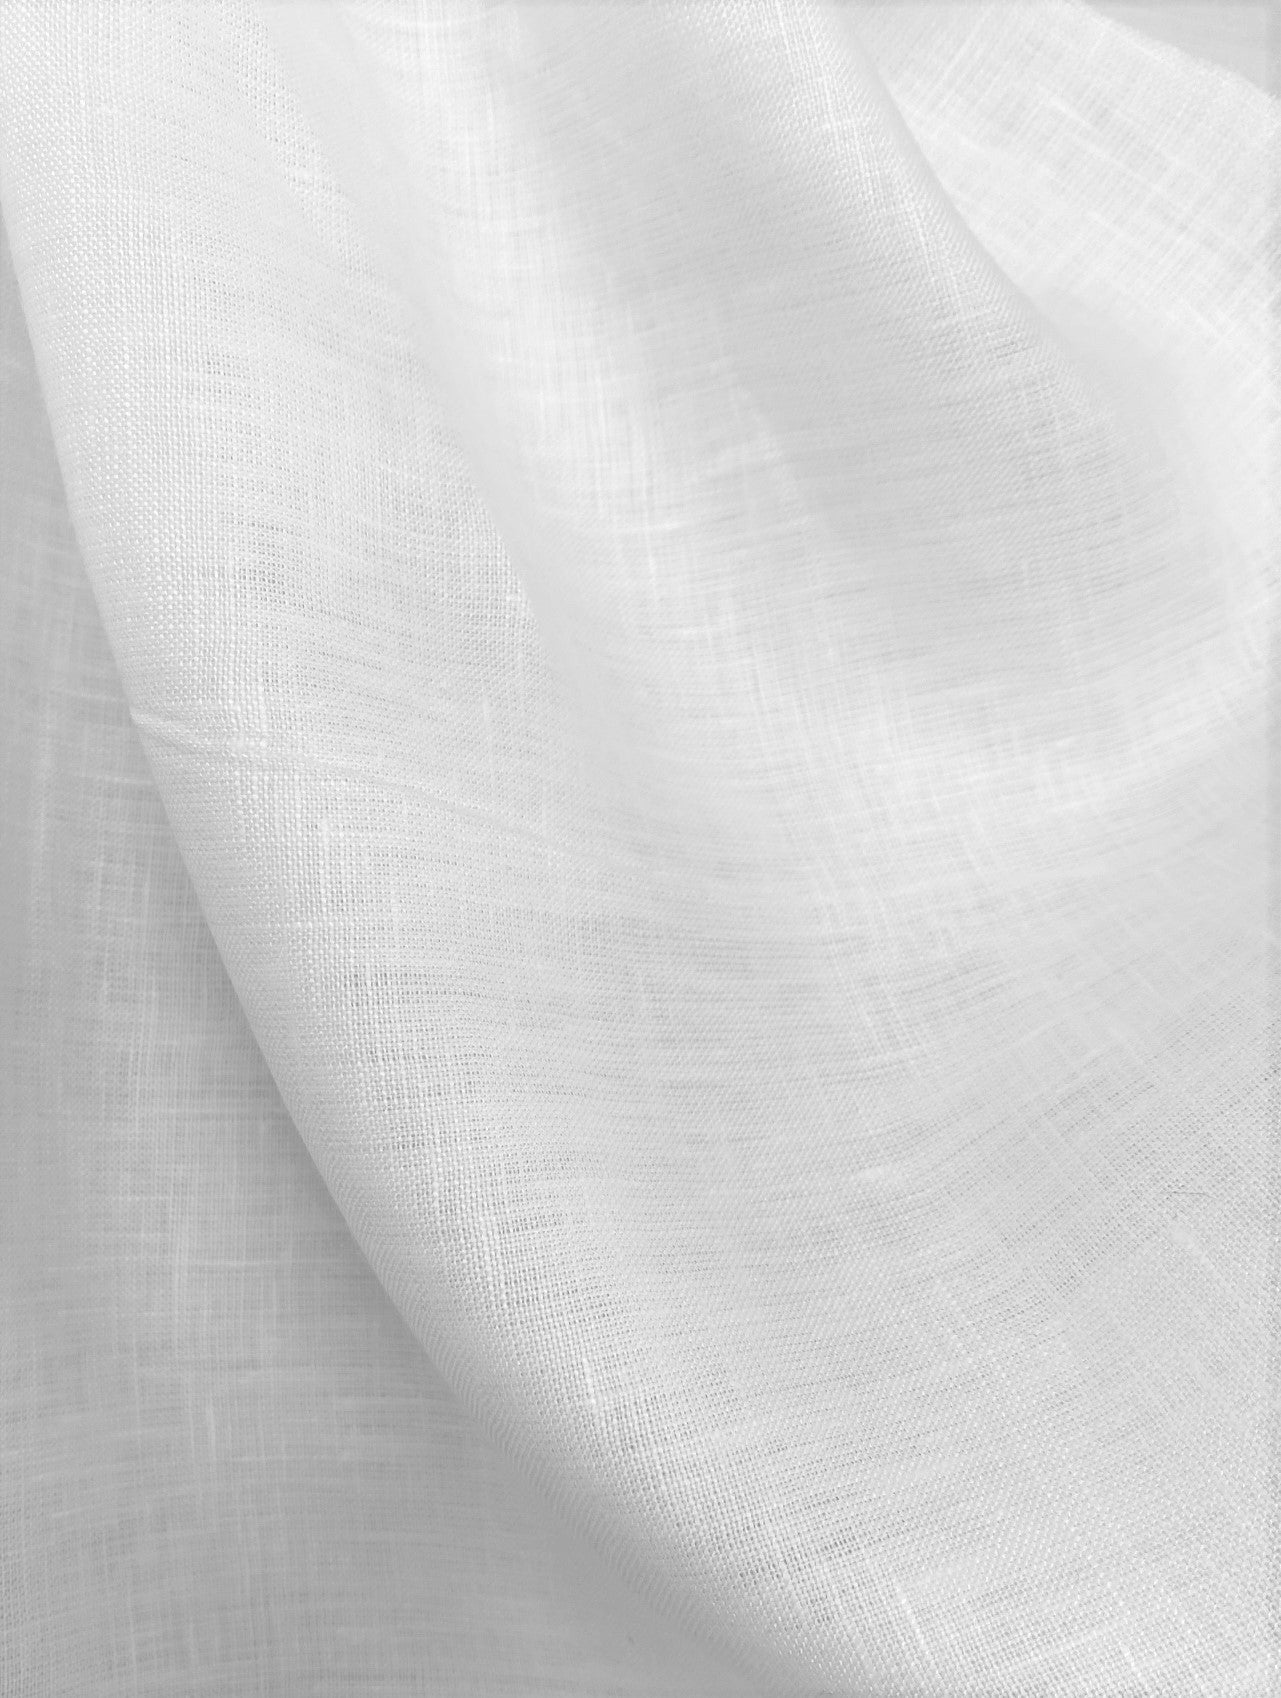 56" Handkerchief Linen - White